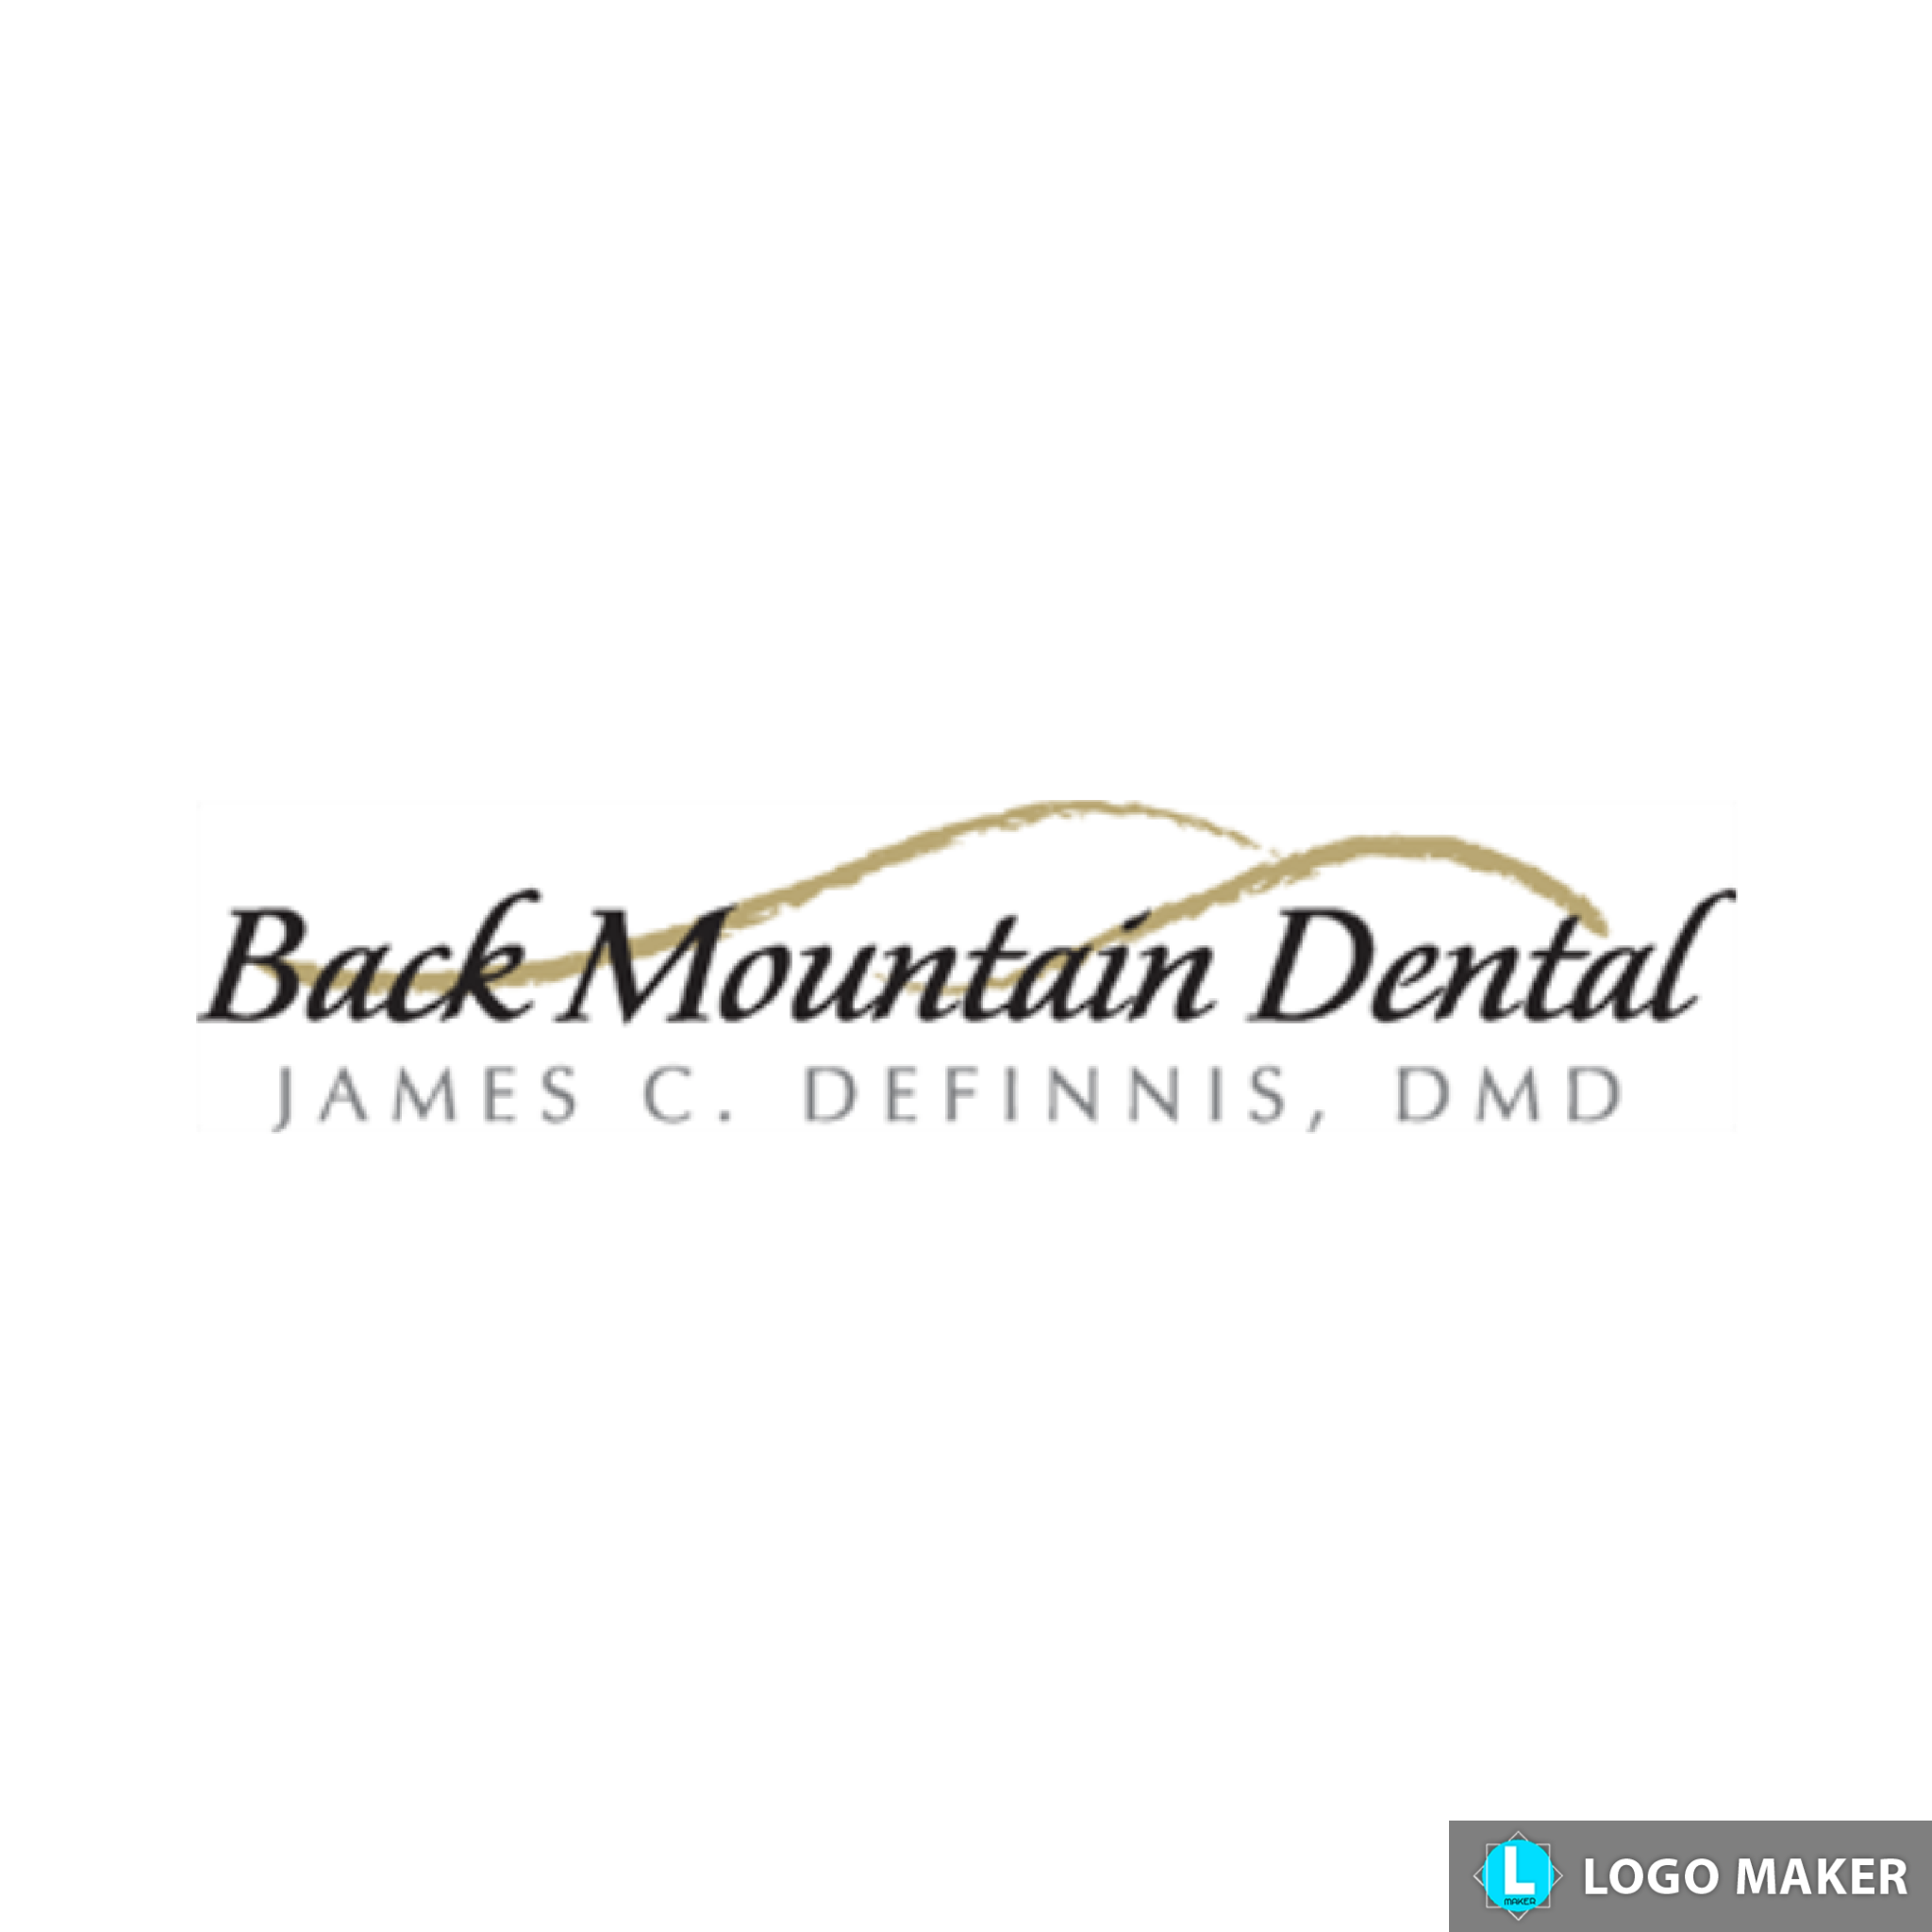 Back Mountain Dental- Logo